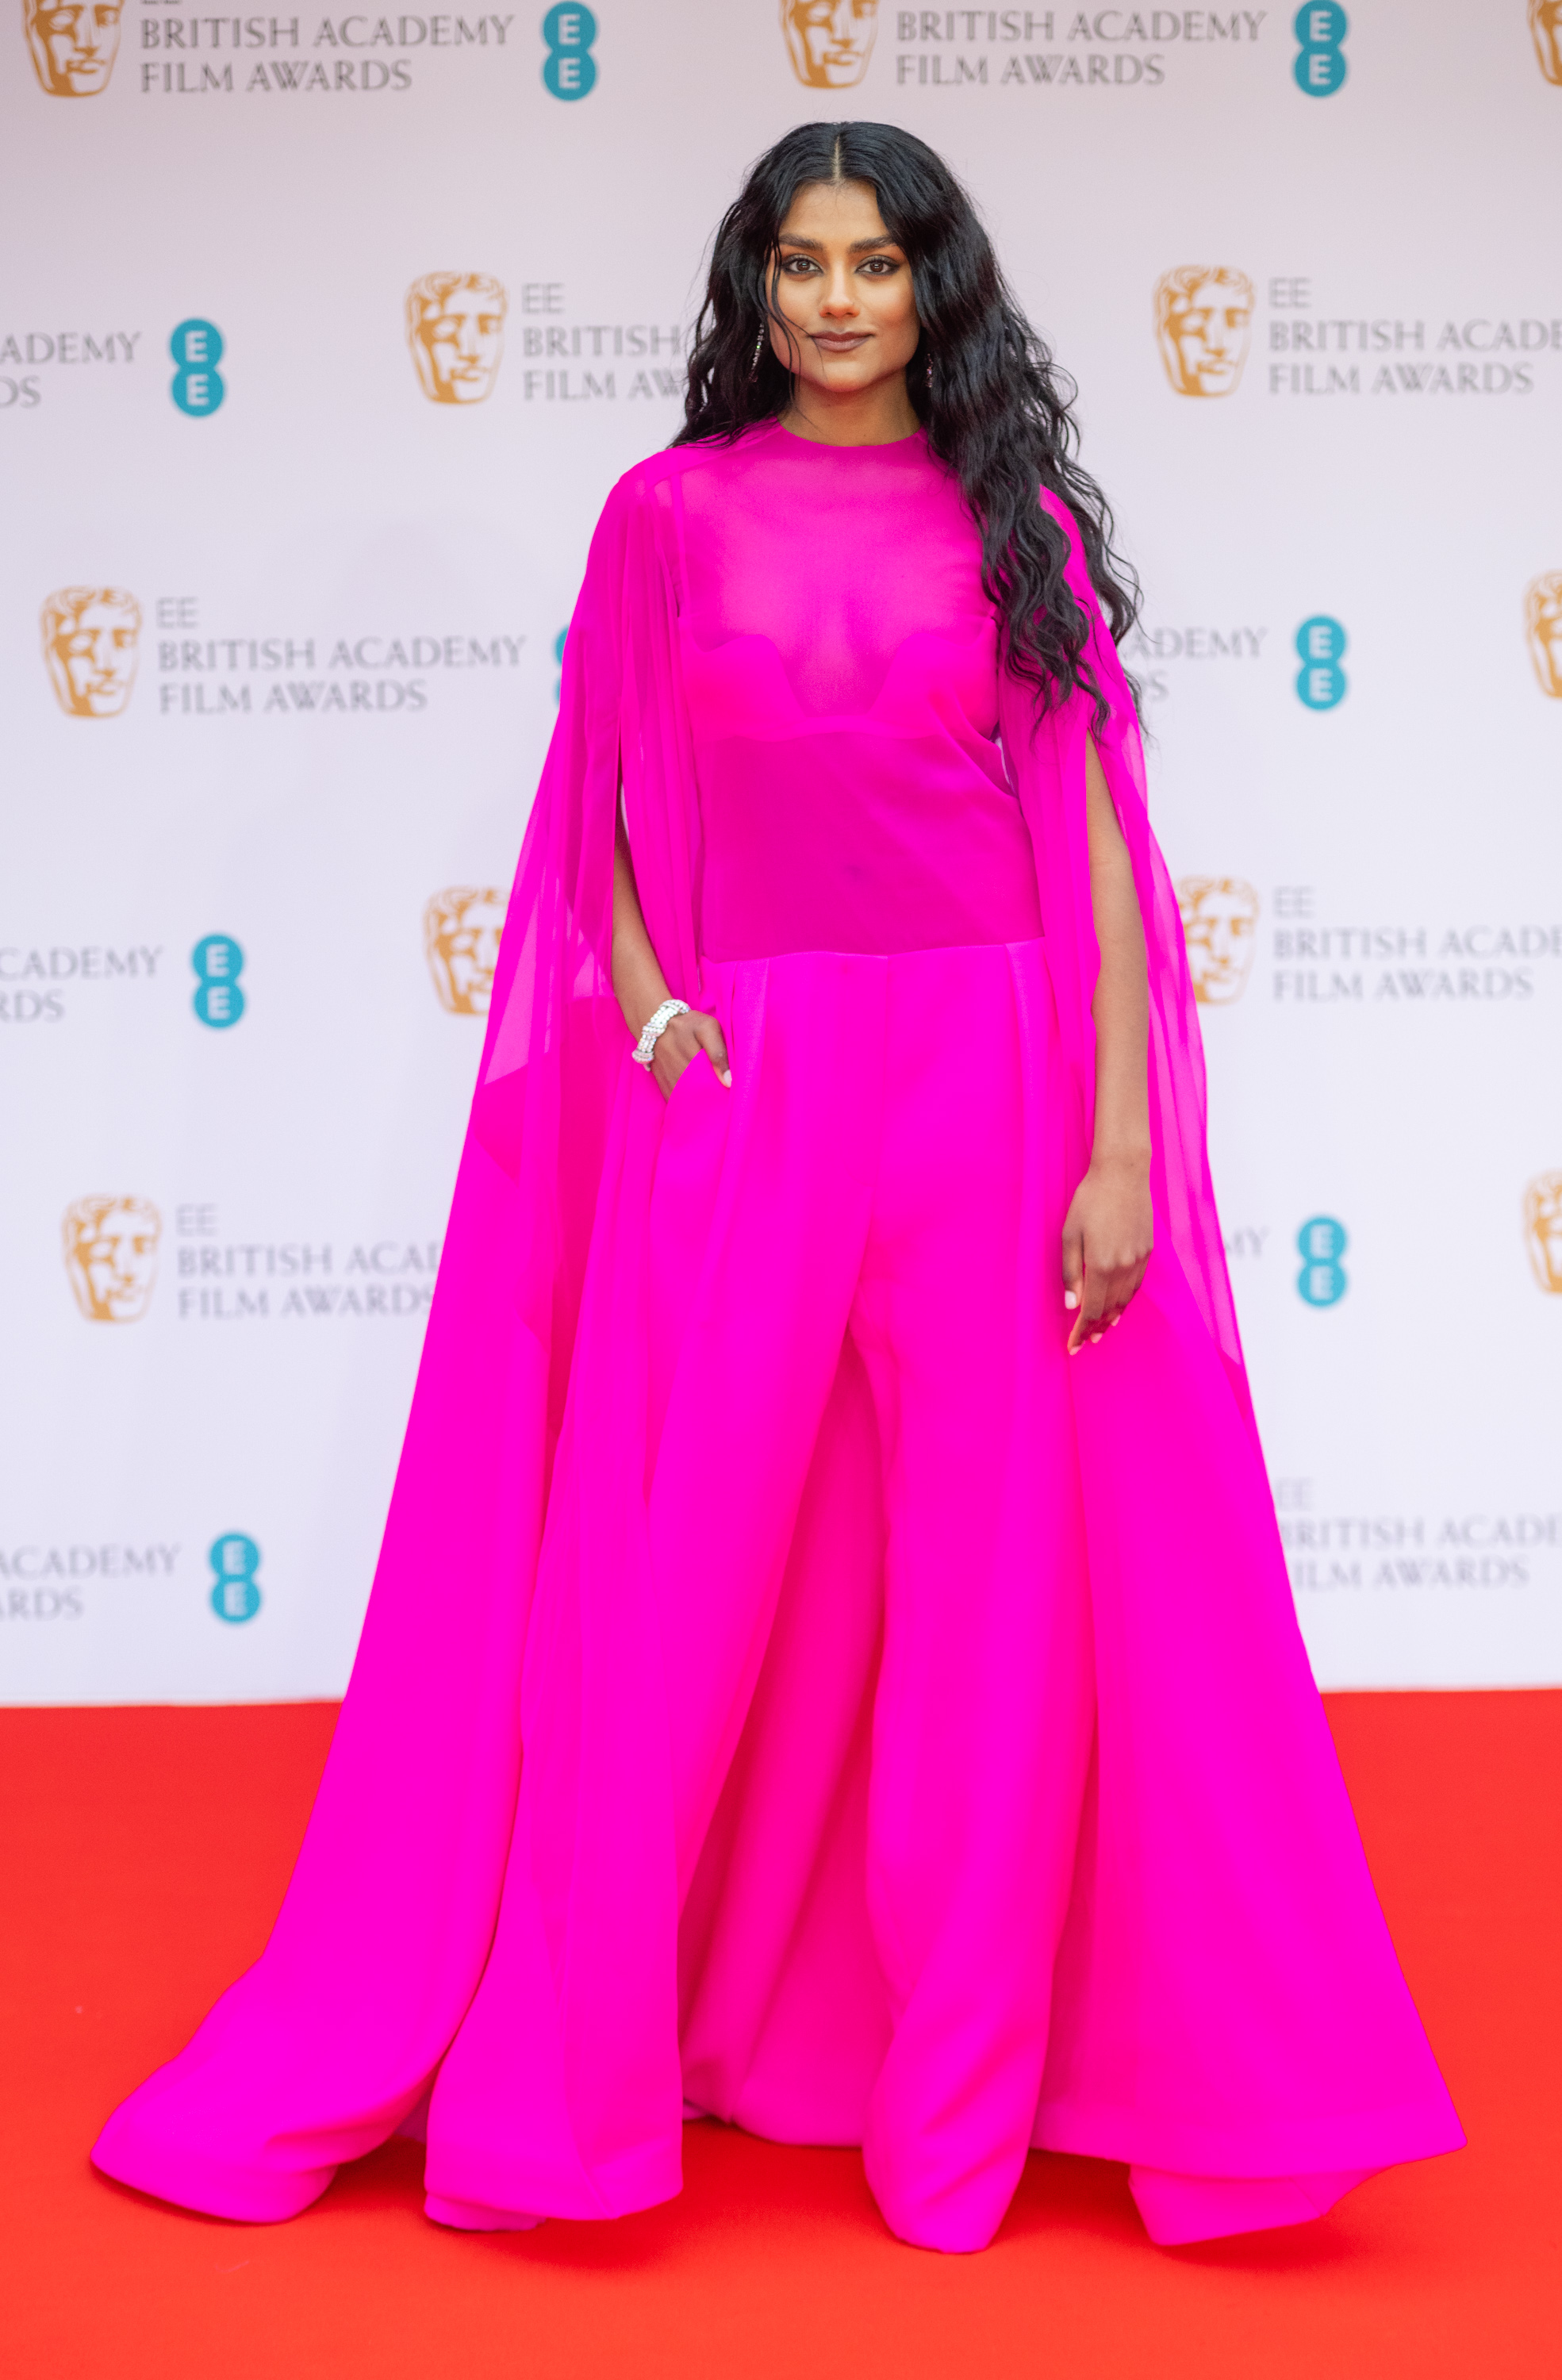 Simone Ashley attends no EE British Academy Film Awards